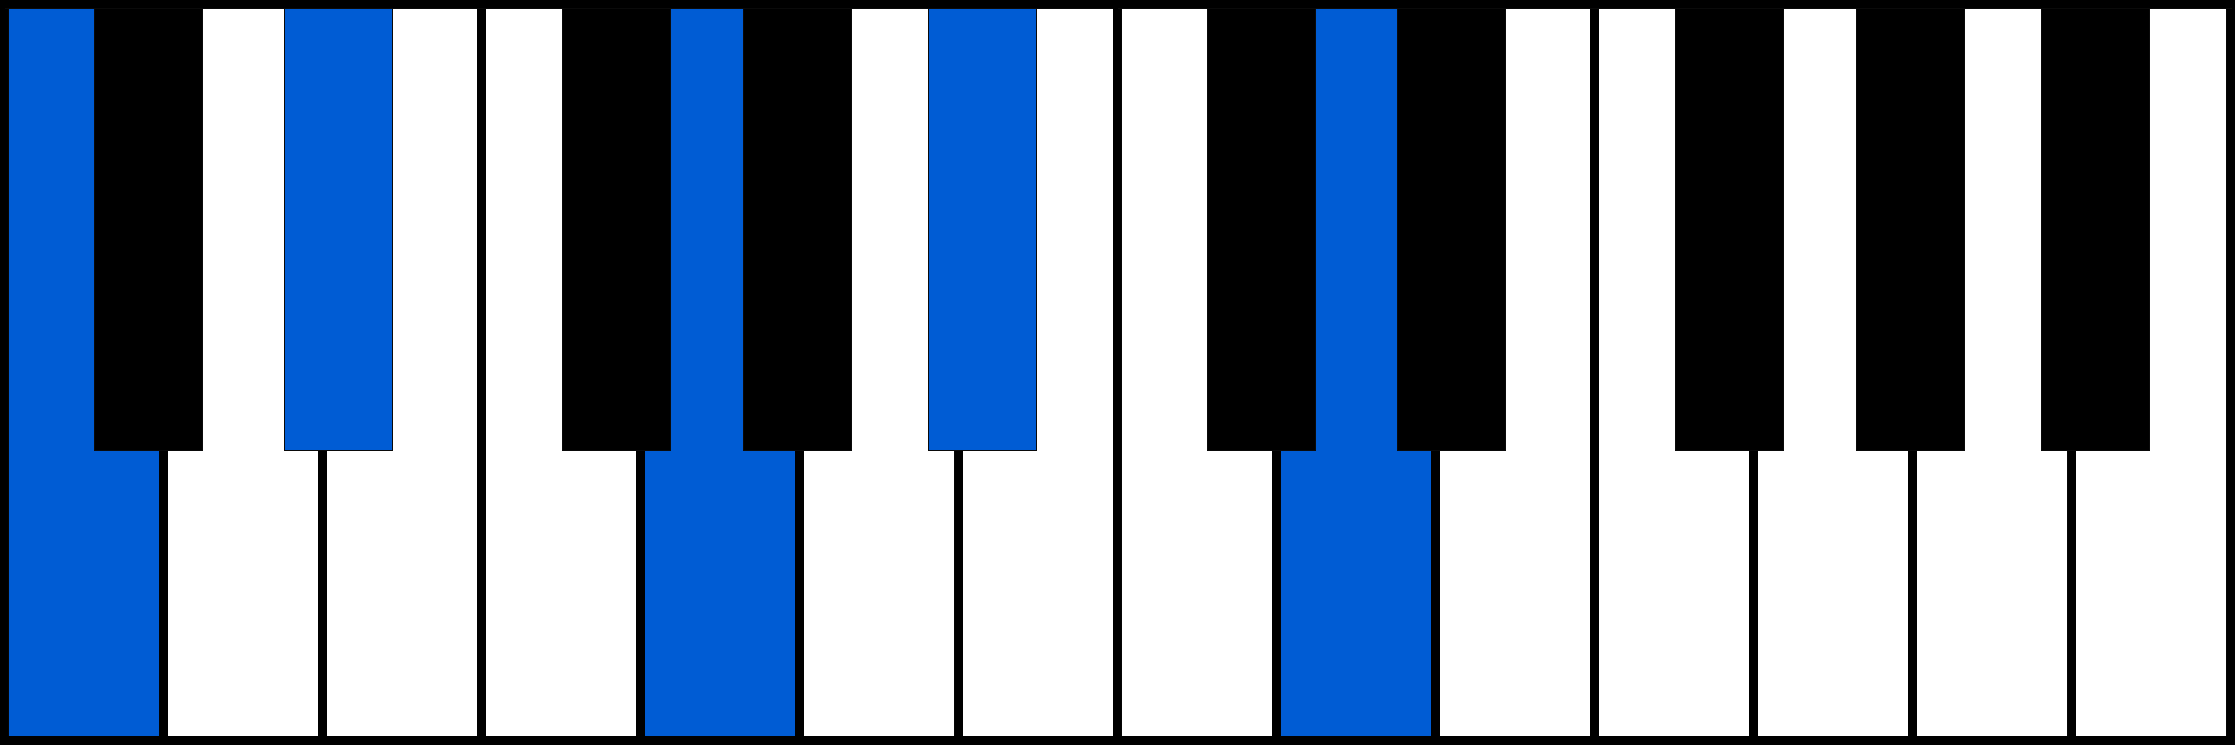 Cm9 piano chord